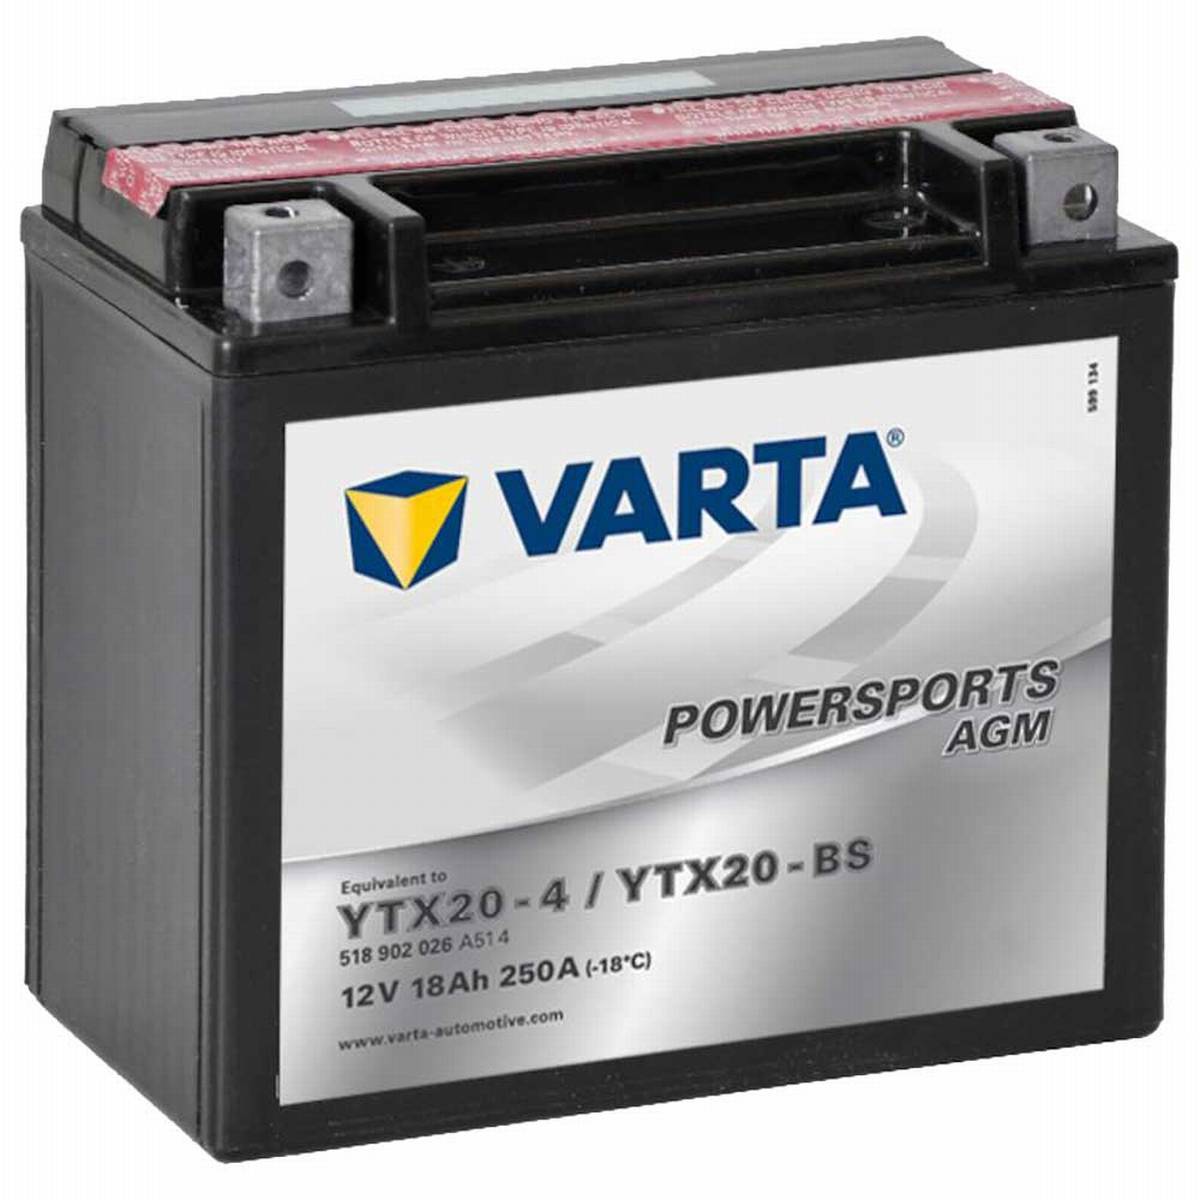 Varta YTX20-4 Powersports AGM batteria moto YTX20-BS 12V 18Ah 250A 518902026